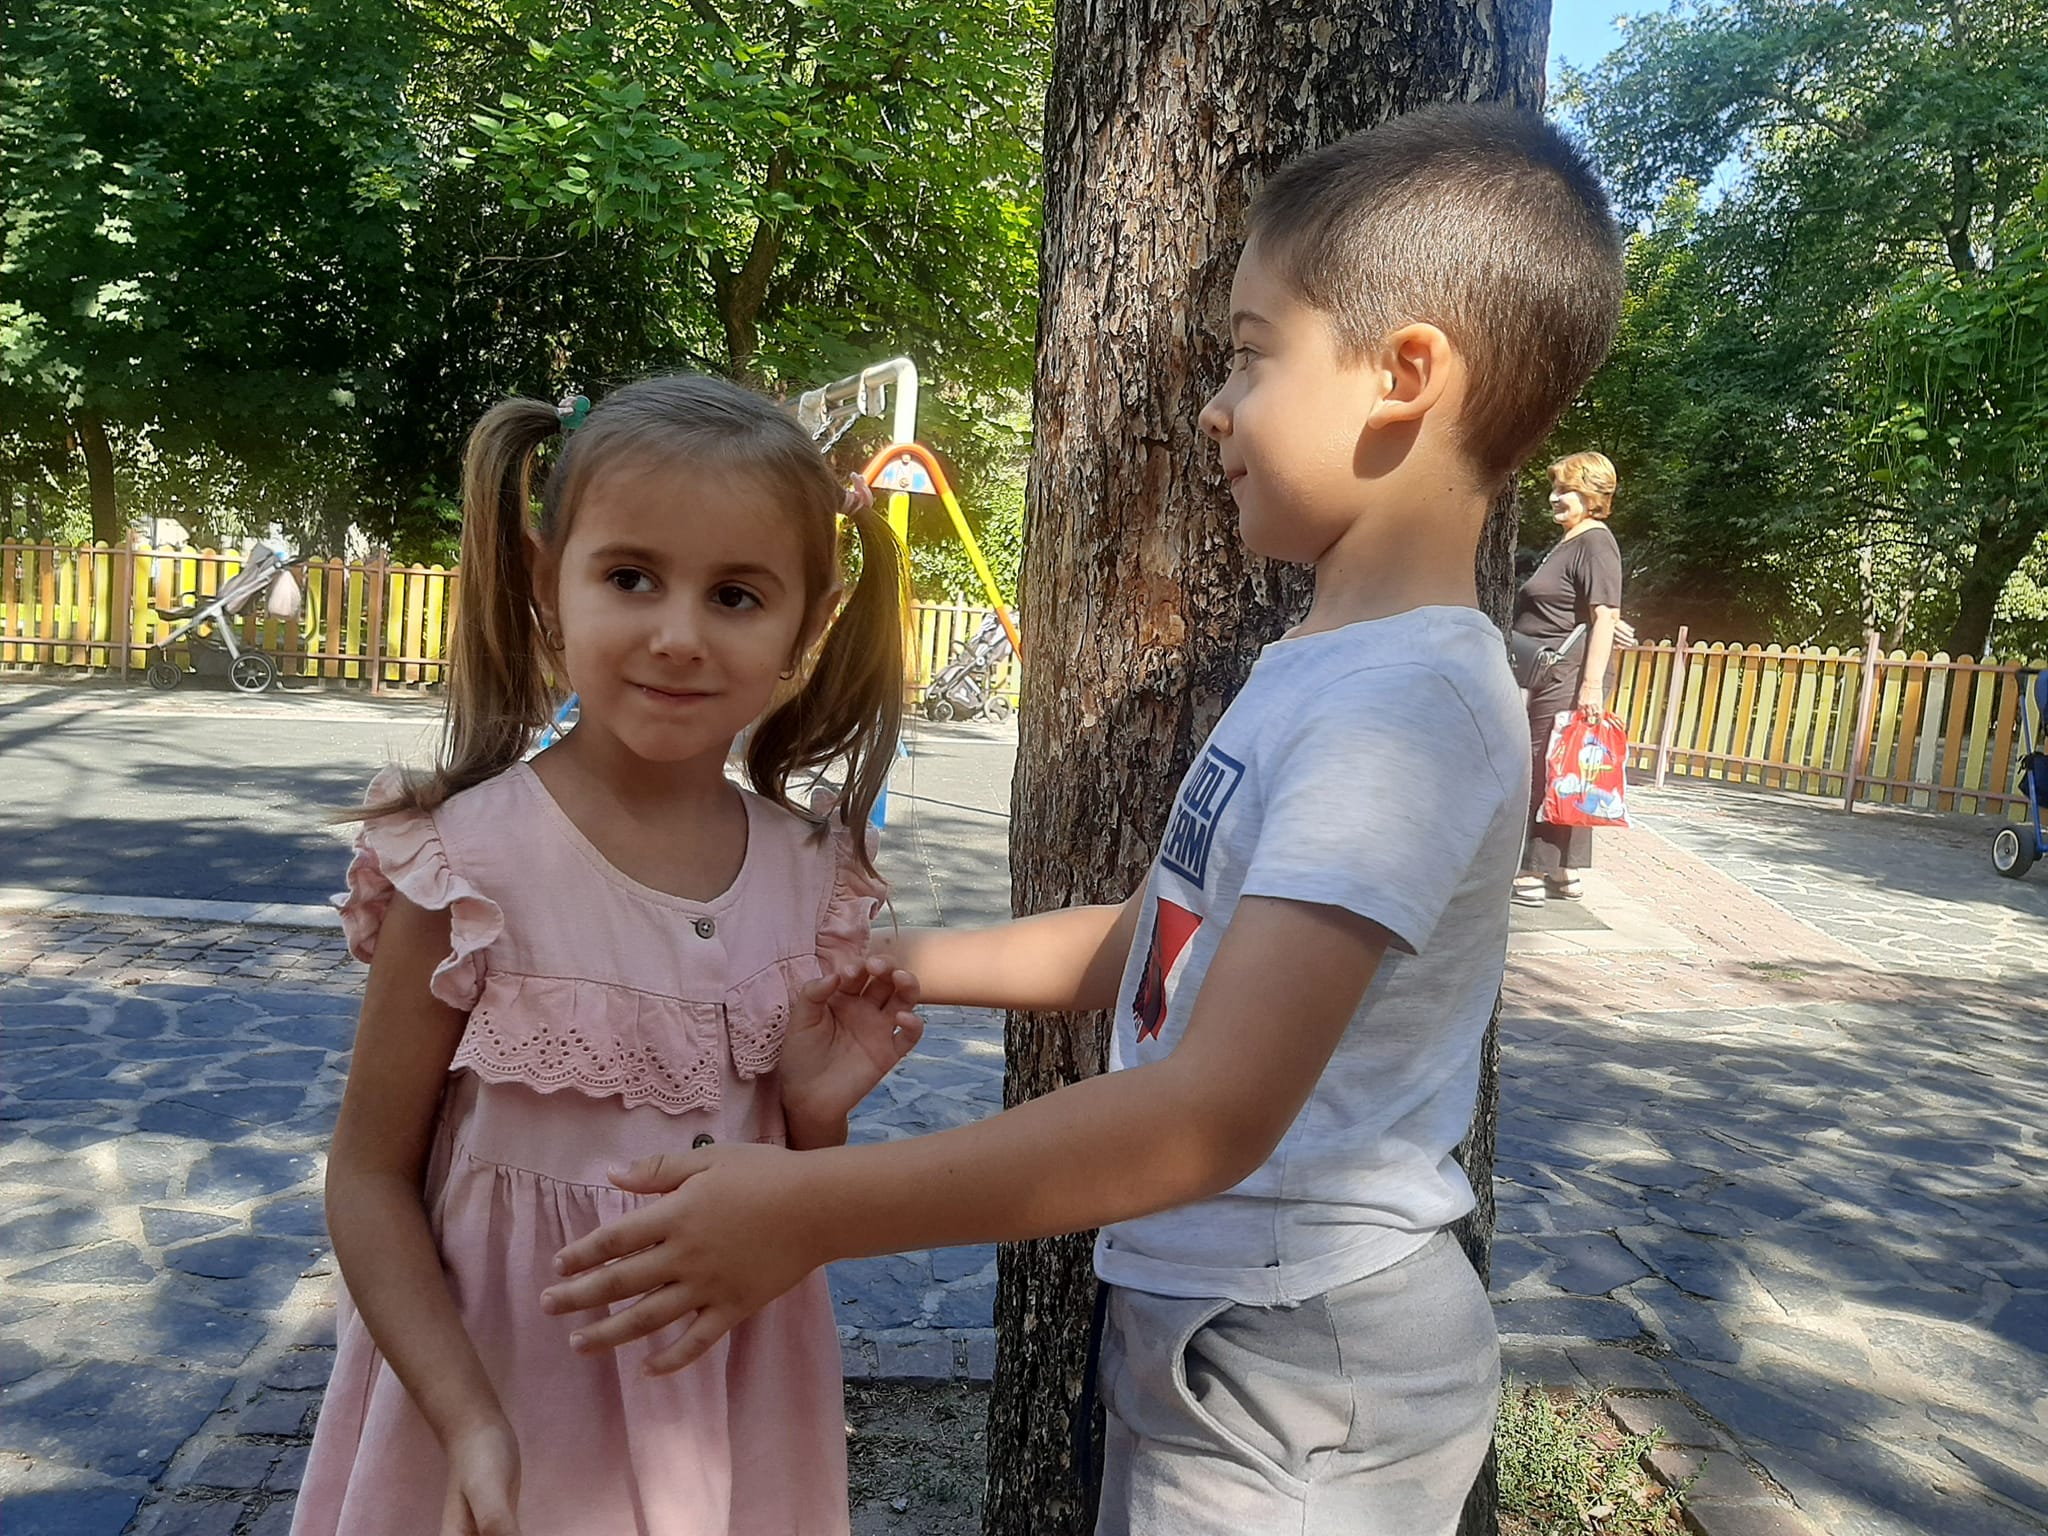 Книжките самоходки откриха своите малки читатели в парка на Благоевград